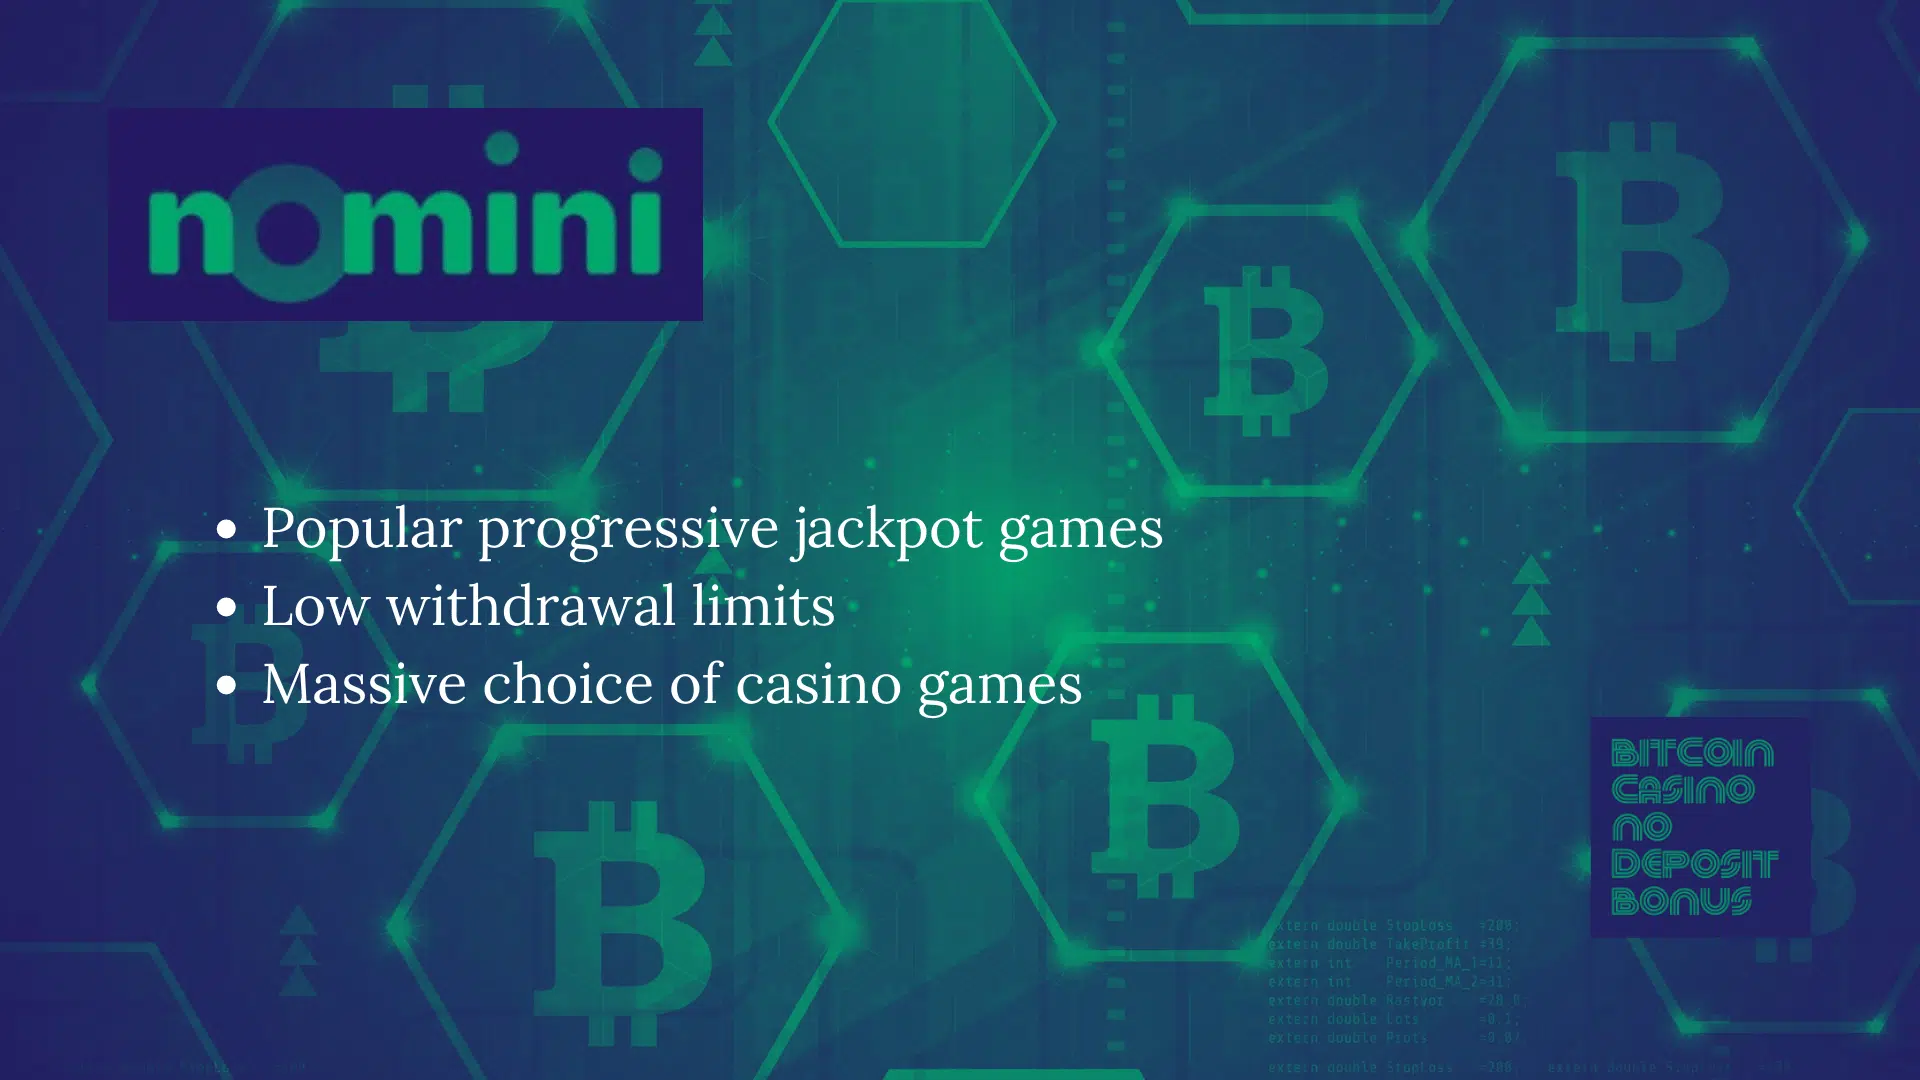 You are currently viewing Nomini Casino Promo Codes – Nomini.com Free Bonuses December 2022